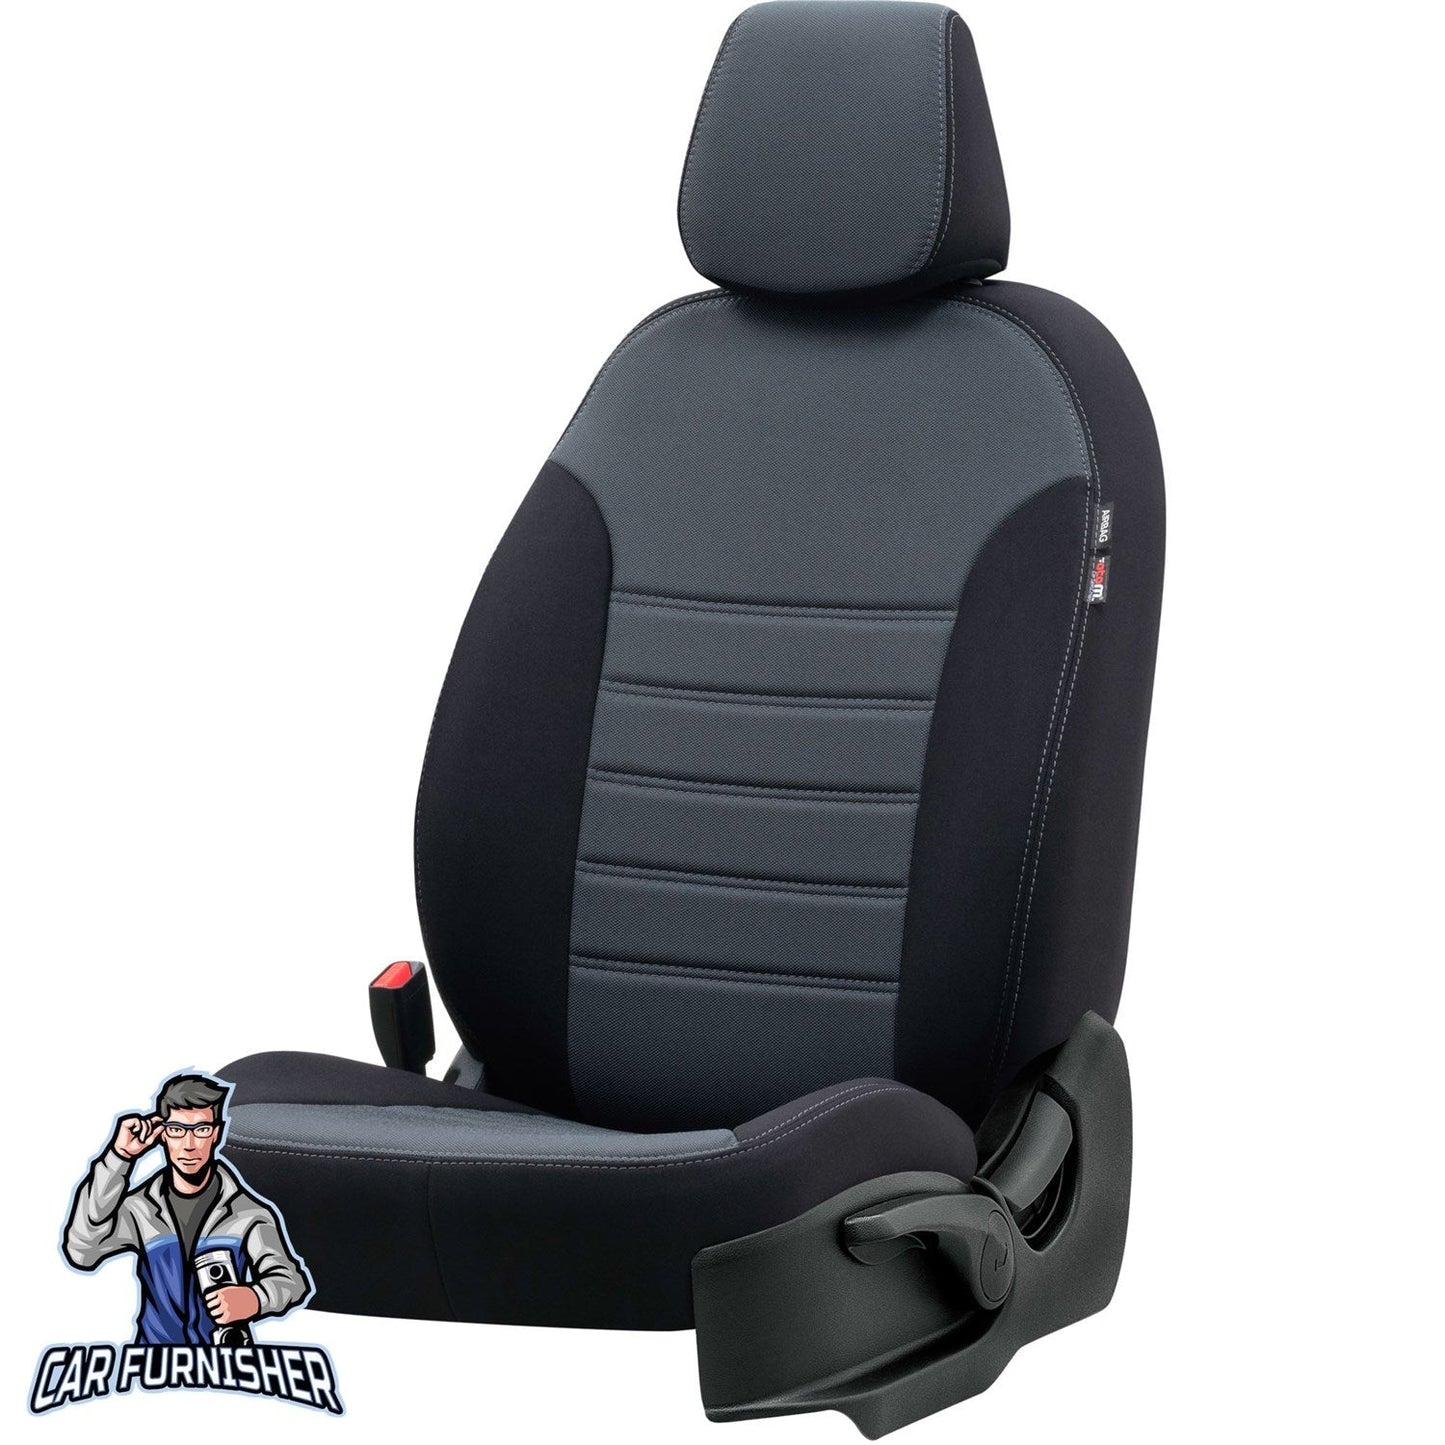 Fiat Marea Seat Covers Original Jacquard Design Smoked Black Jacquard Fabric